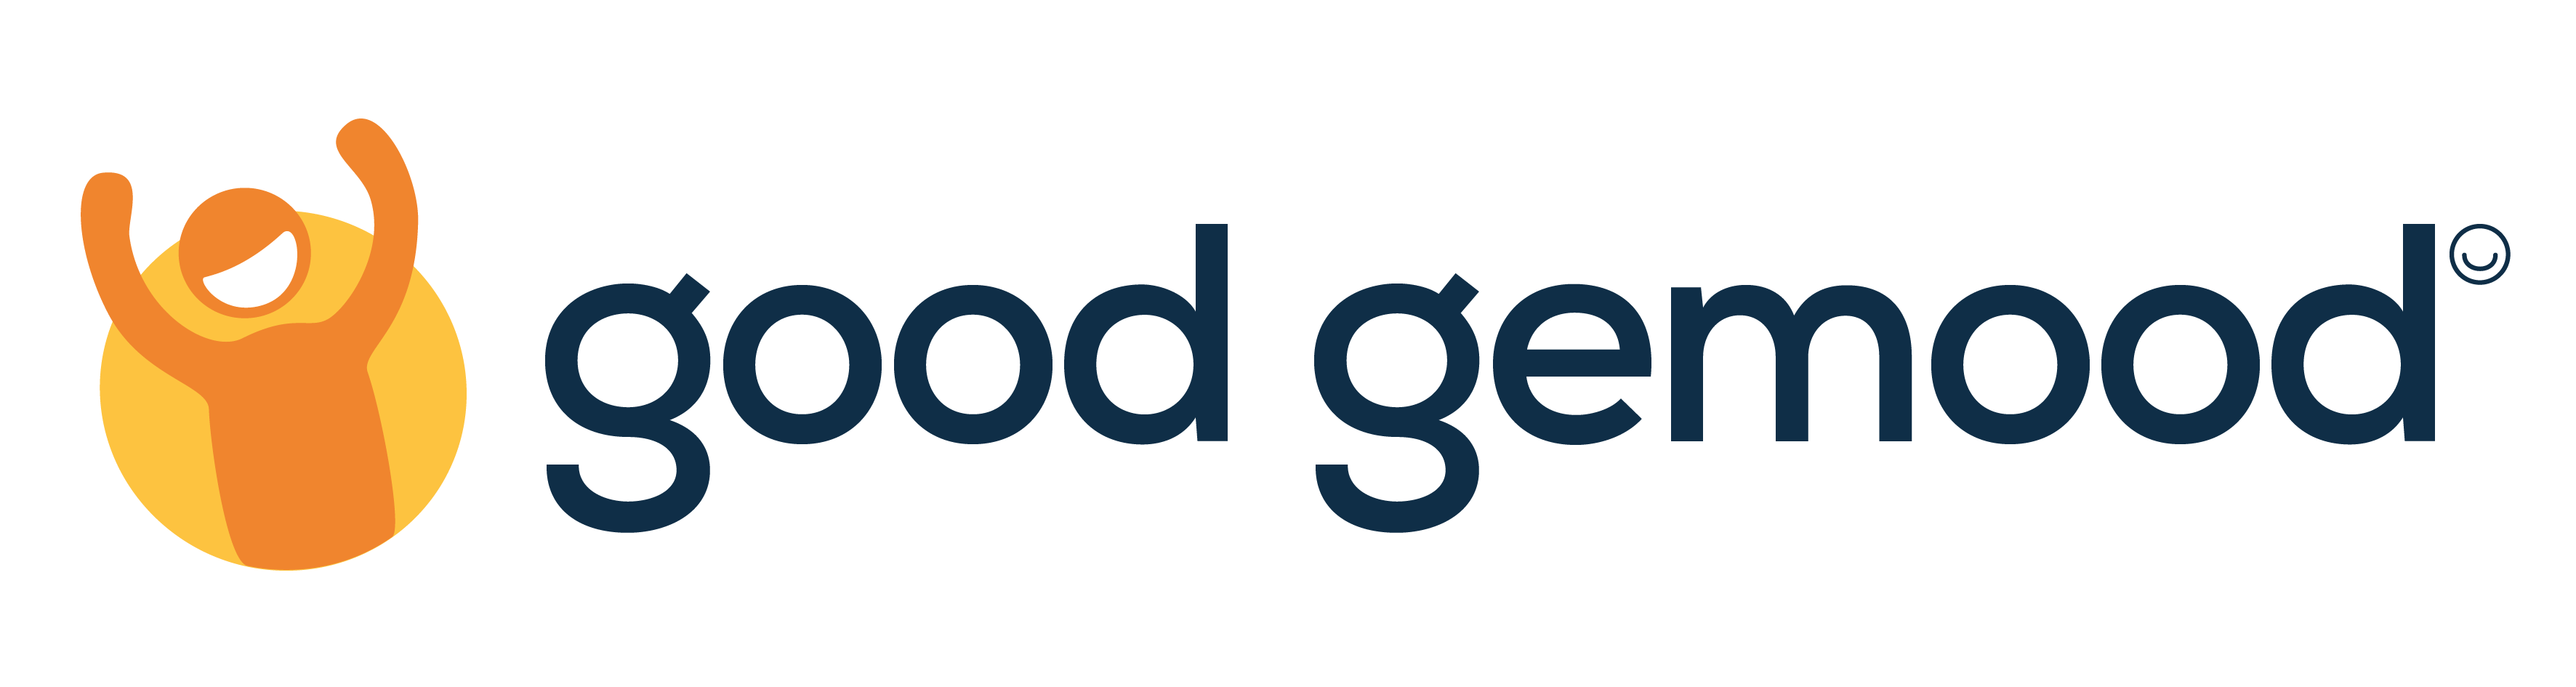 Goodgemood-logo-color_Tekengebied 1